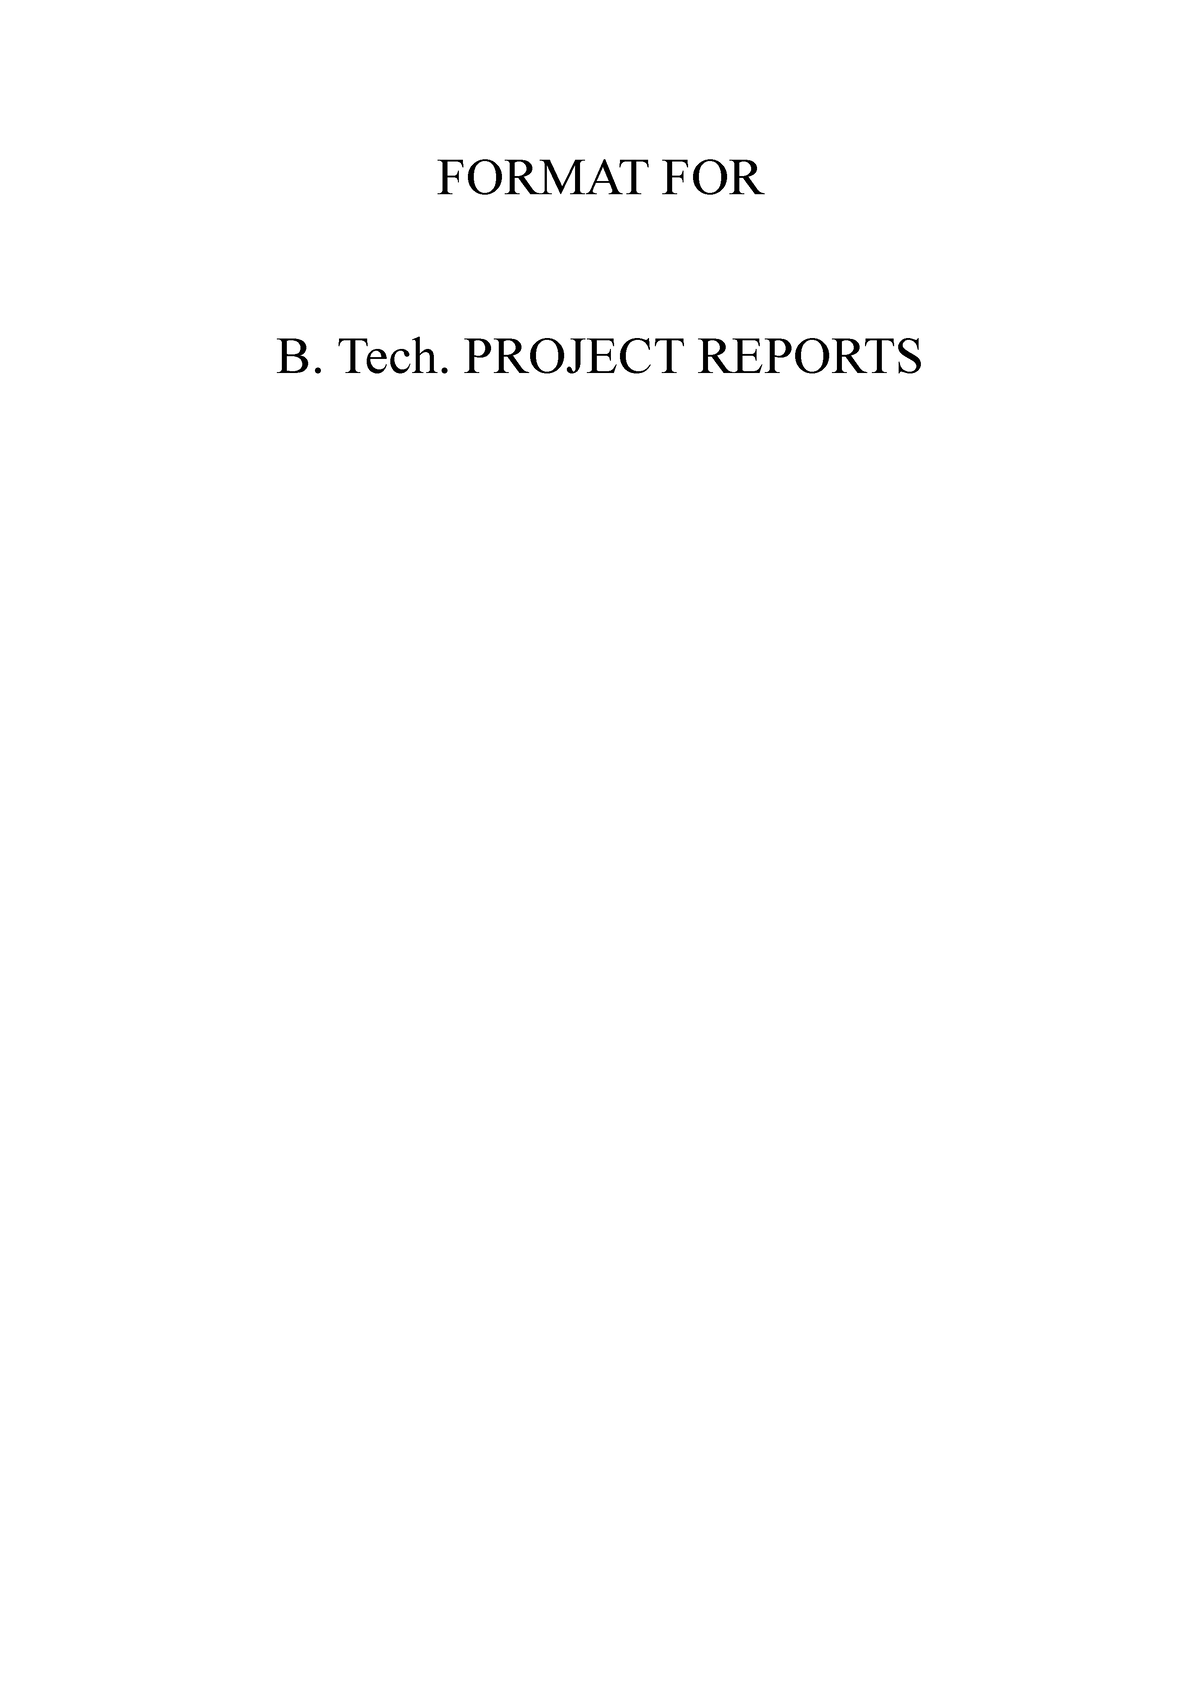 thesis format aktu